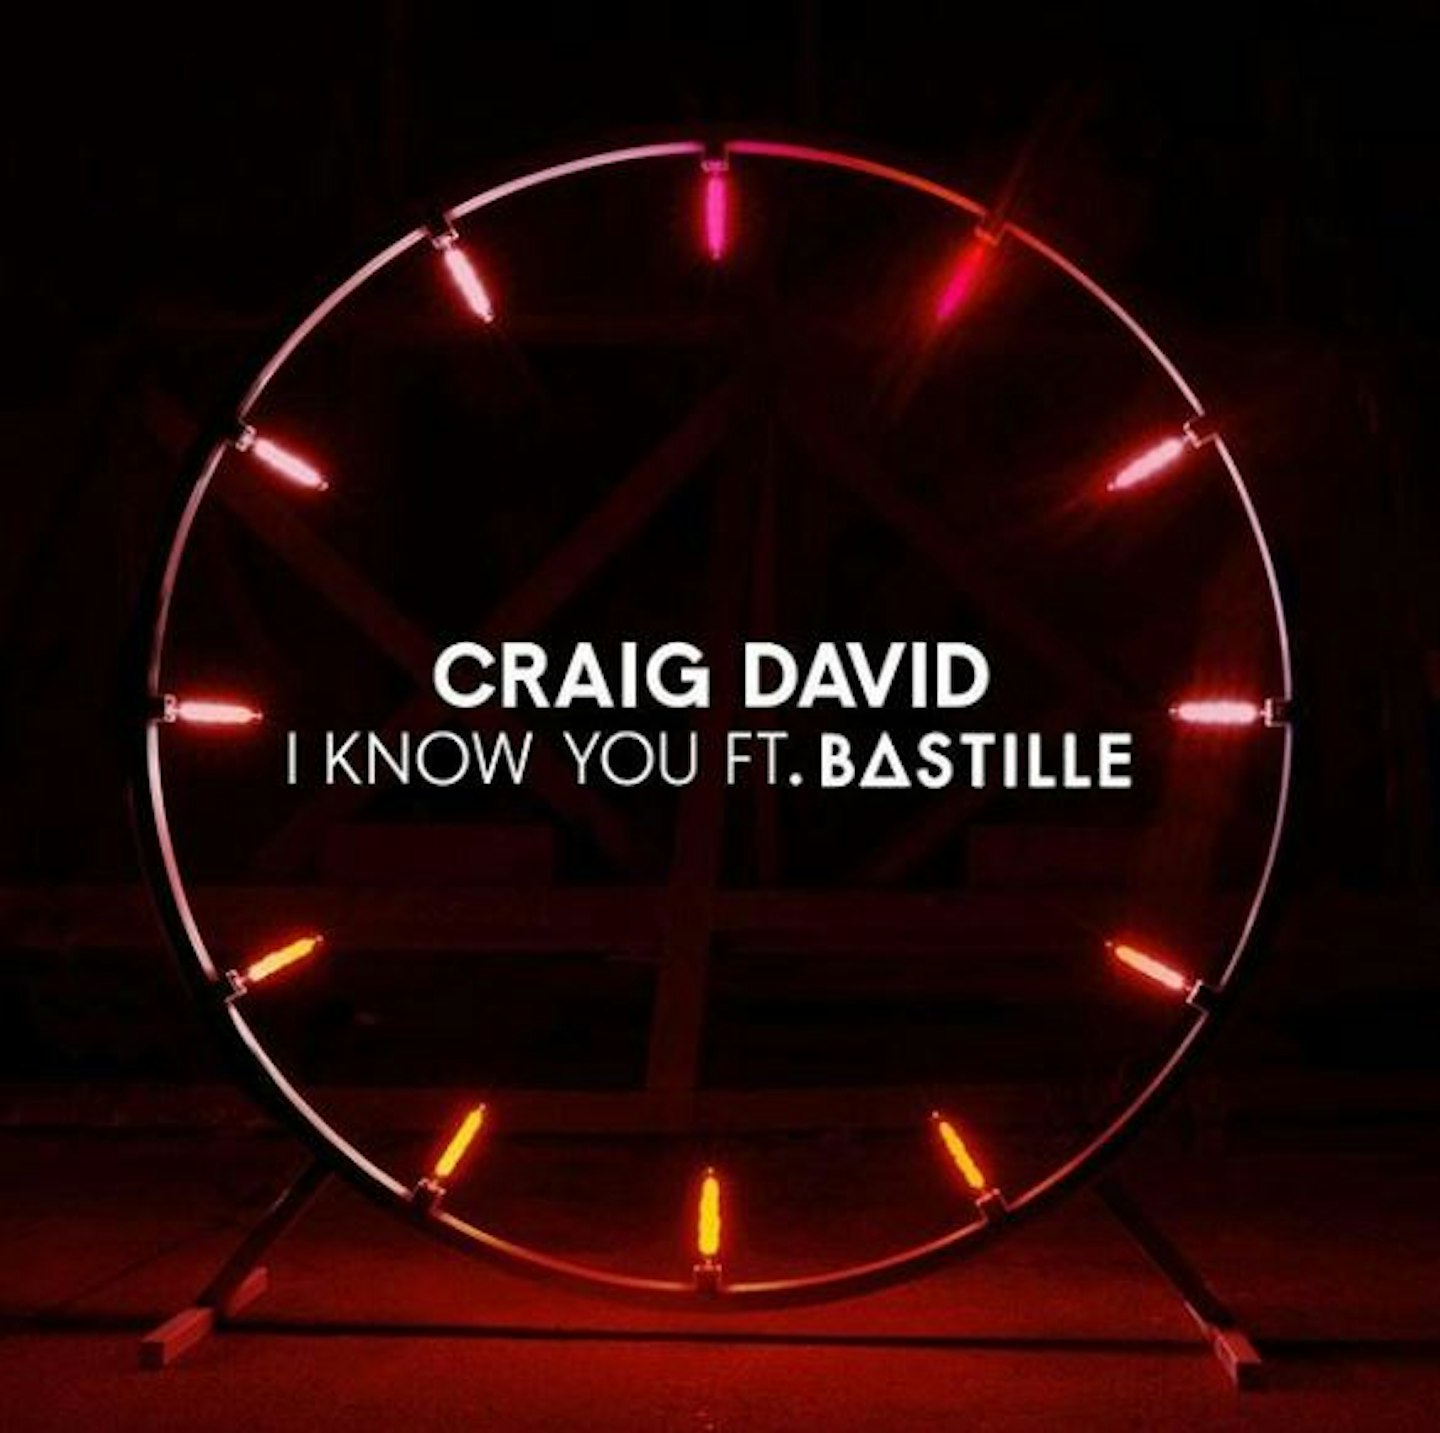 Craig David and Bastille